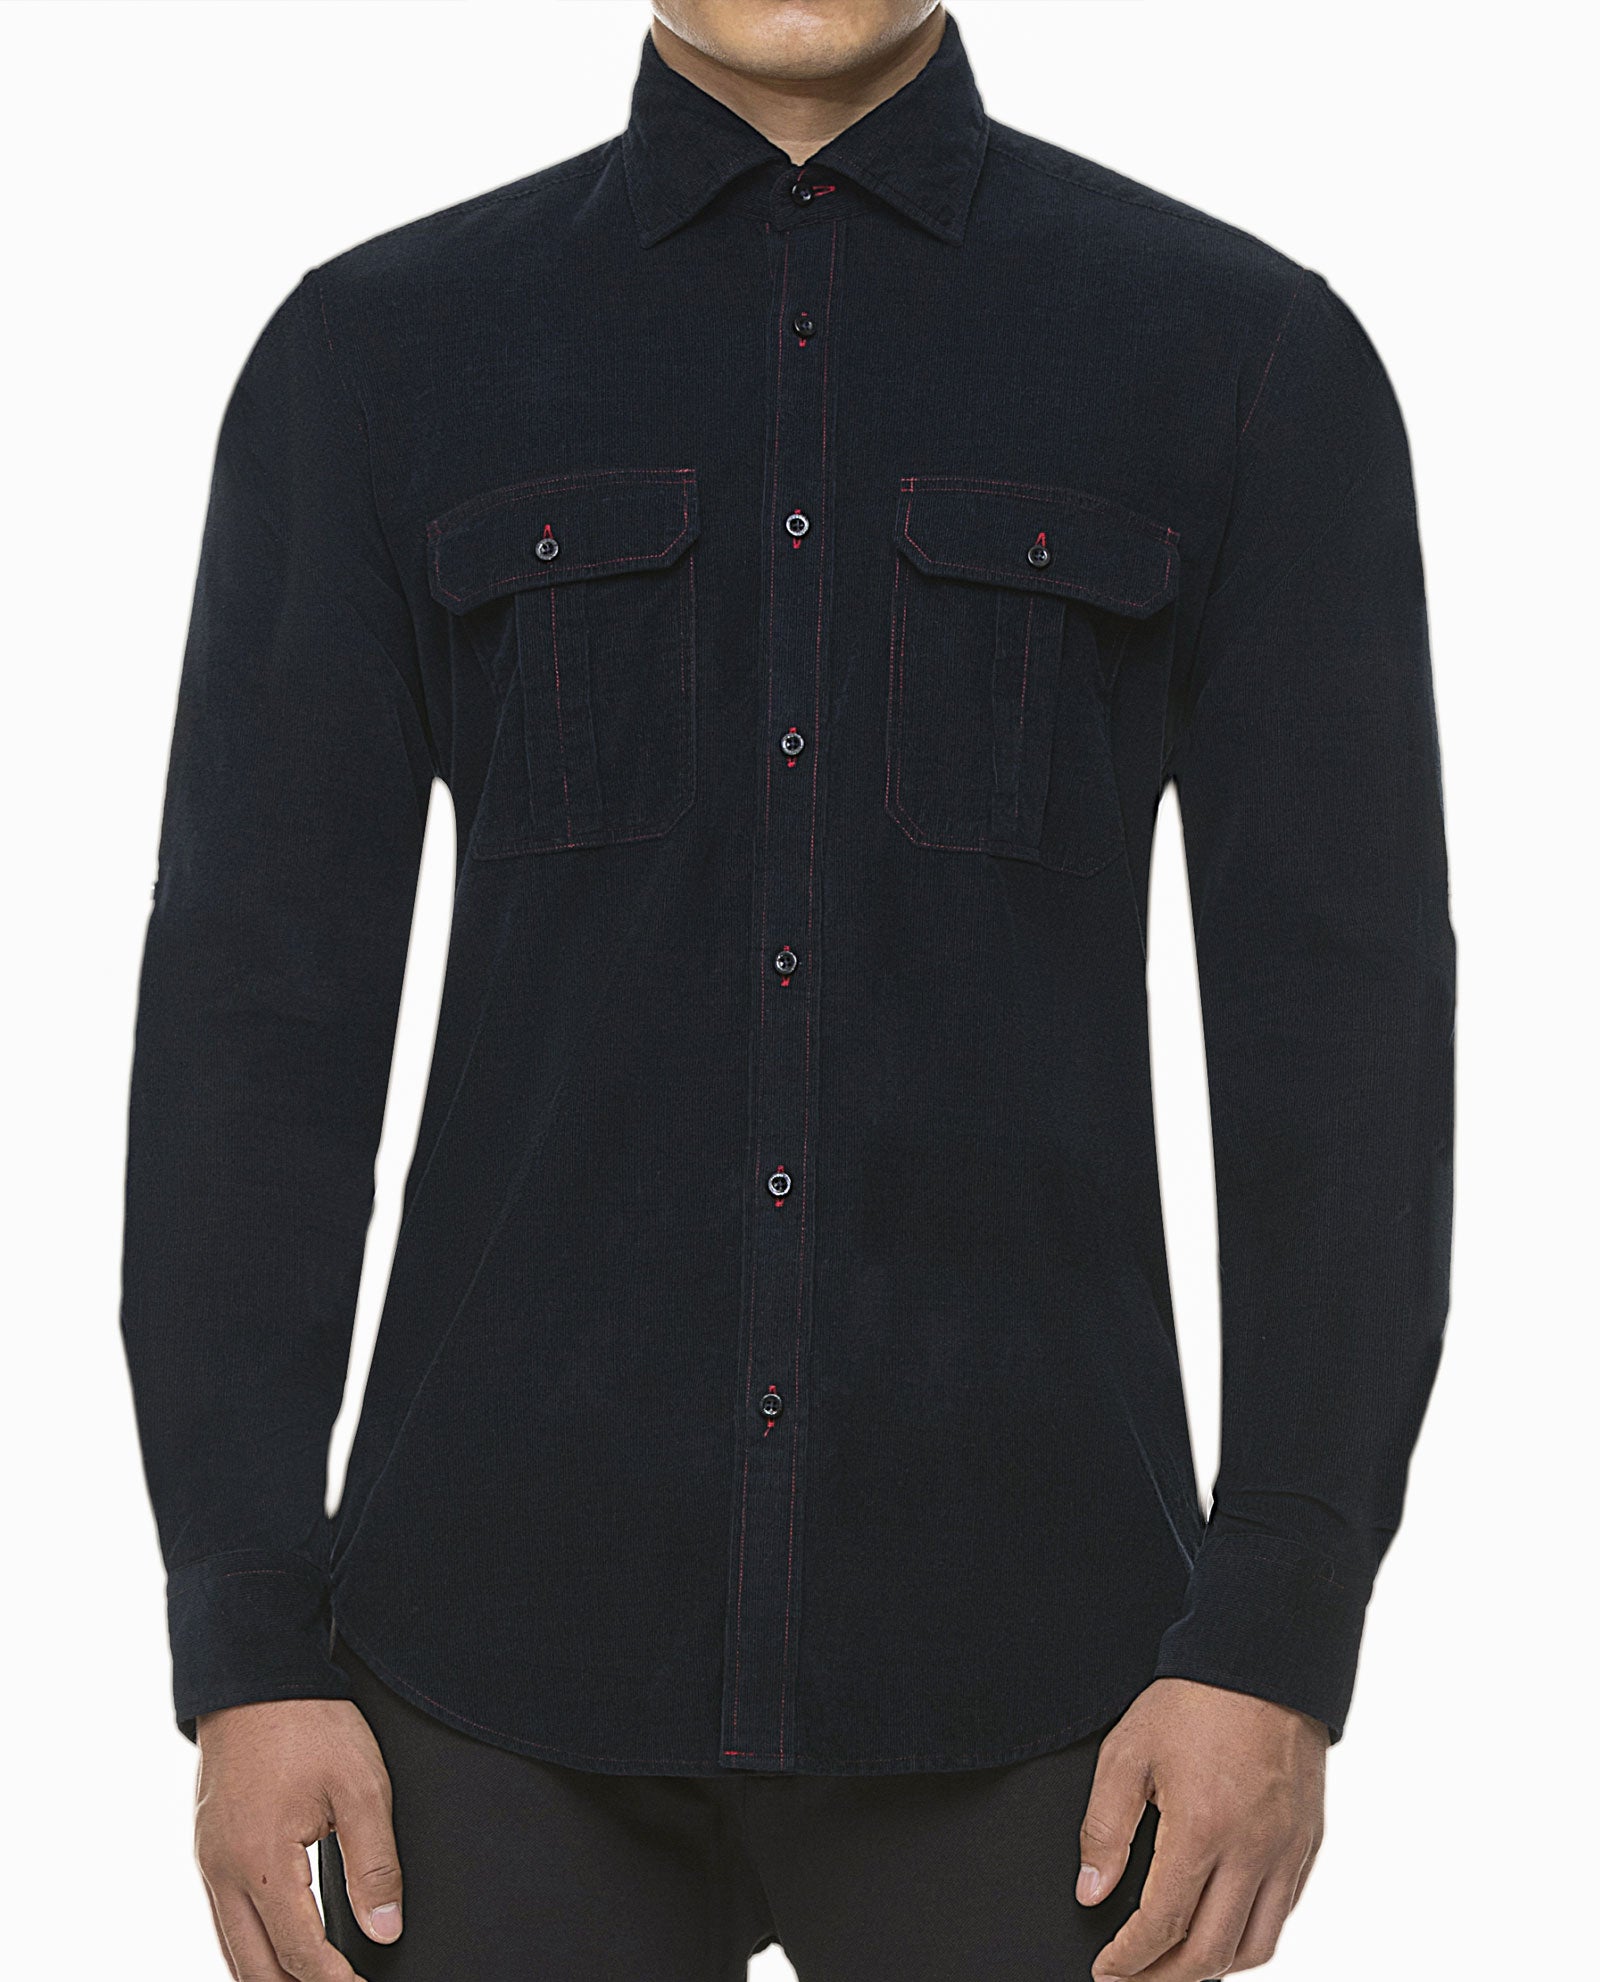 Flannel Black Sport Shirt